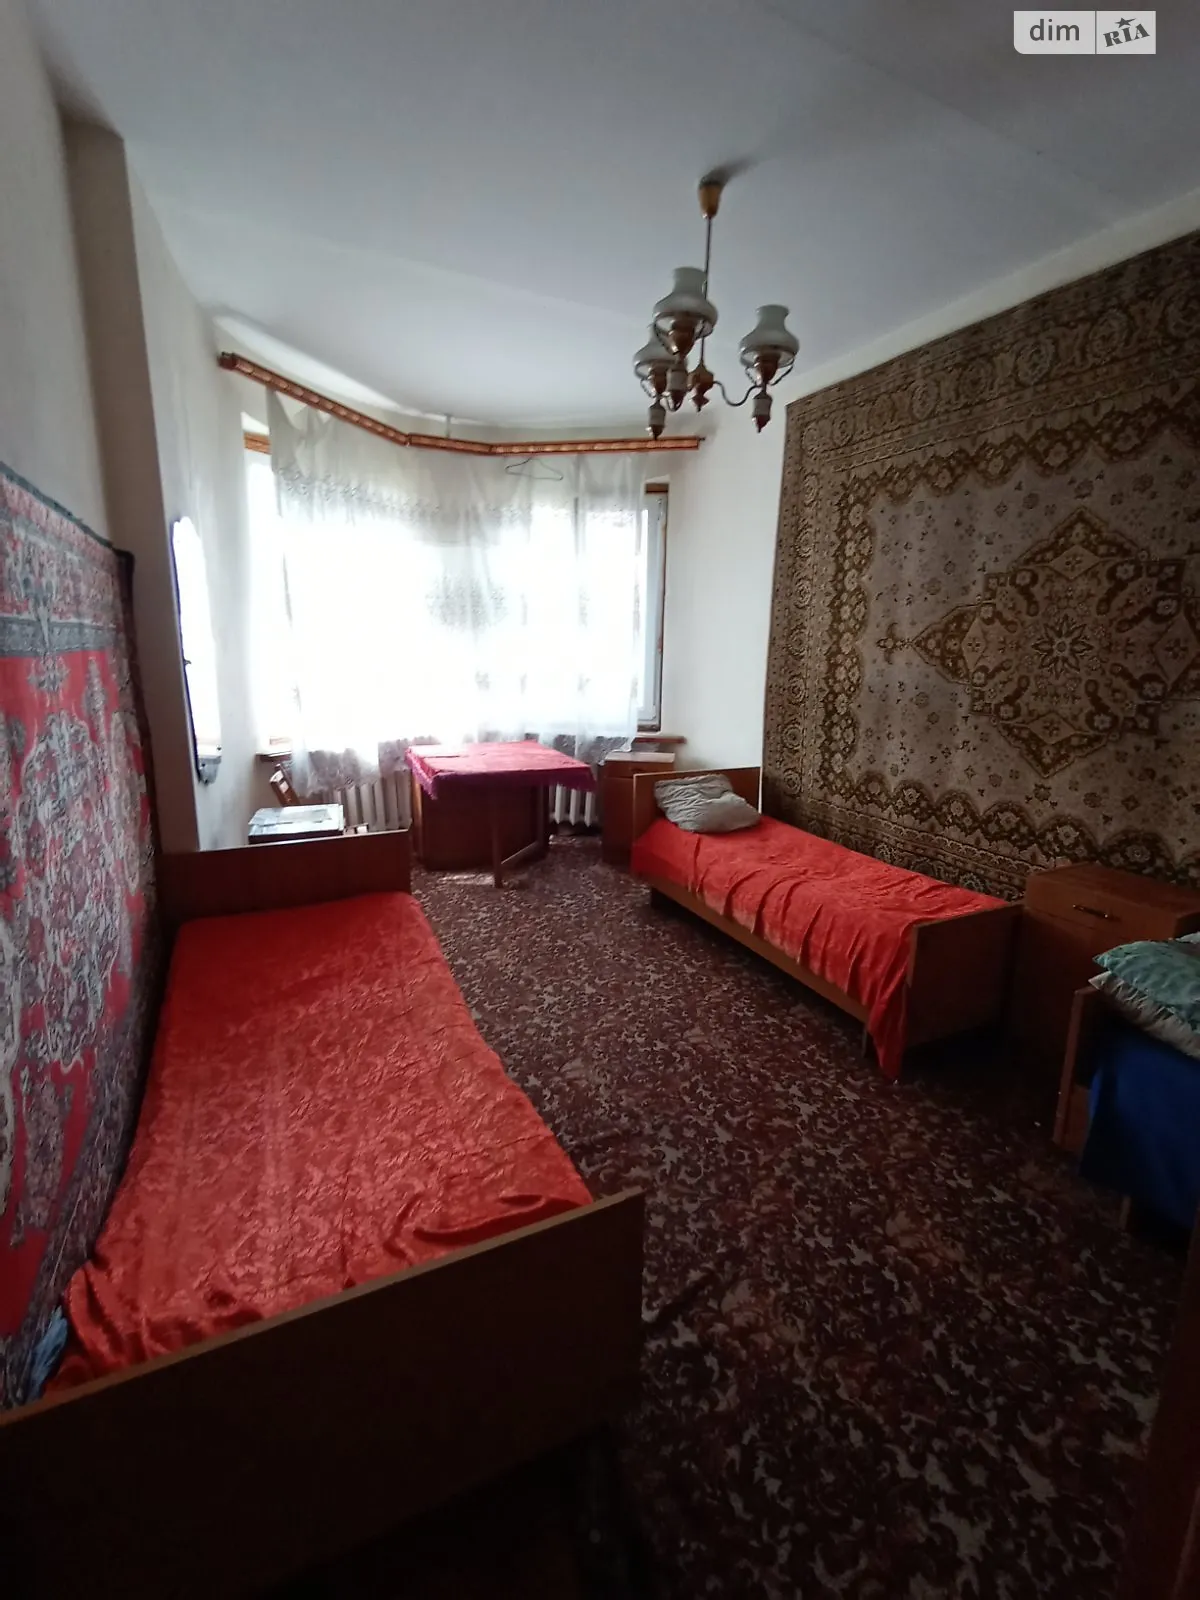 Сдается в аренду комната 300 кв. м в Ровно, цена: 4000 грн